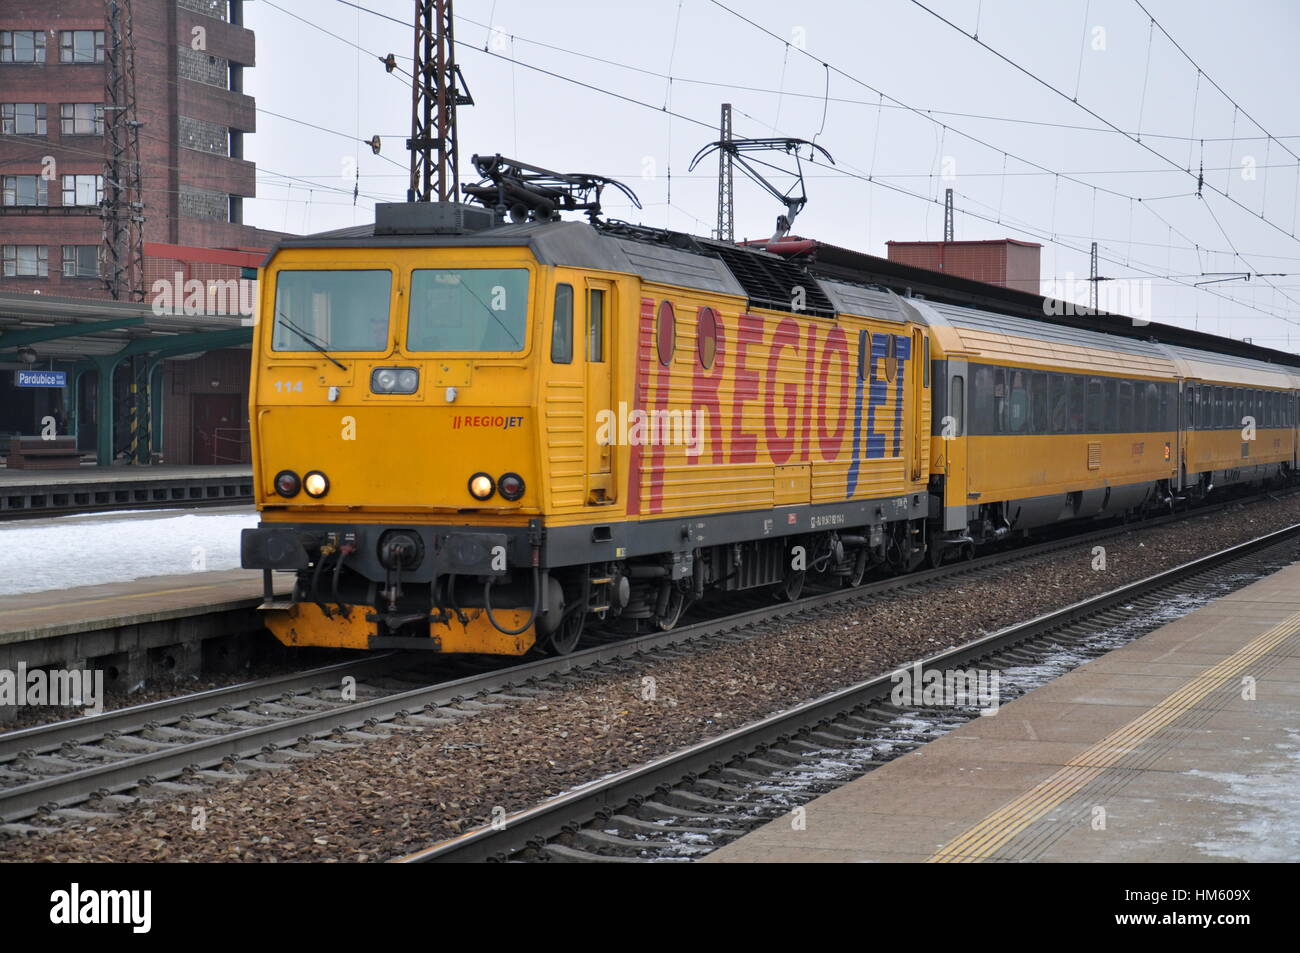 Electric Locomotive Company RegioJet train, transportation, railway, Pardubice Stock Photo